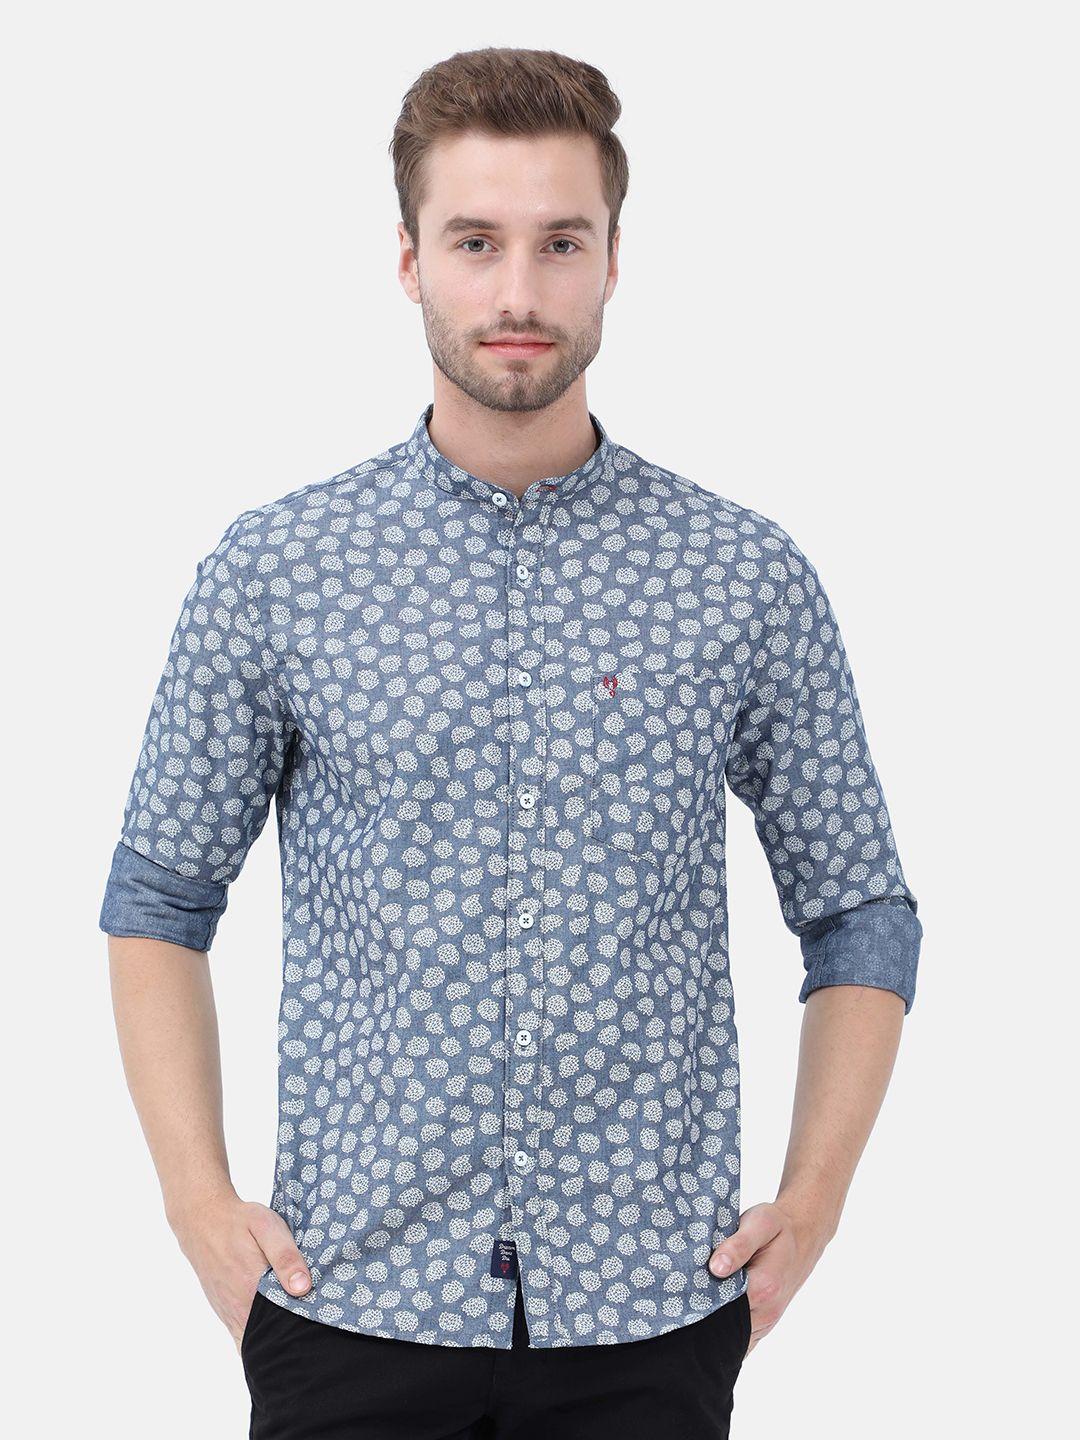 vudu-men-grey-&-white-comfort-floral-printed-mandarin-collar-cotton-casual-shirt